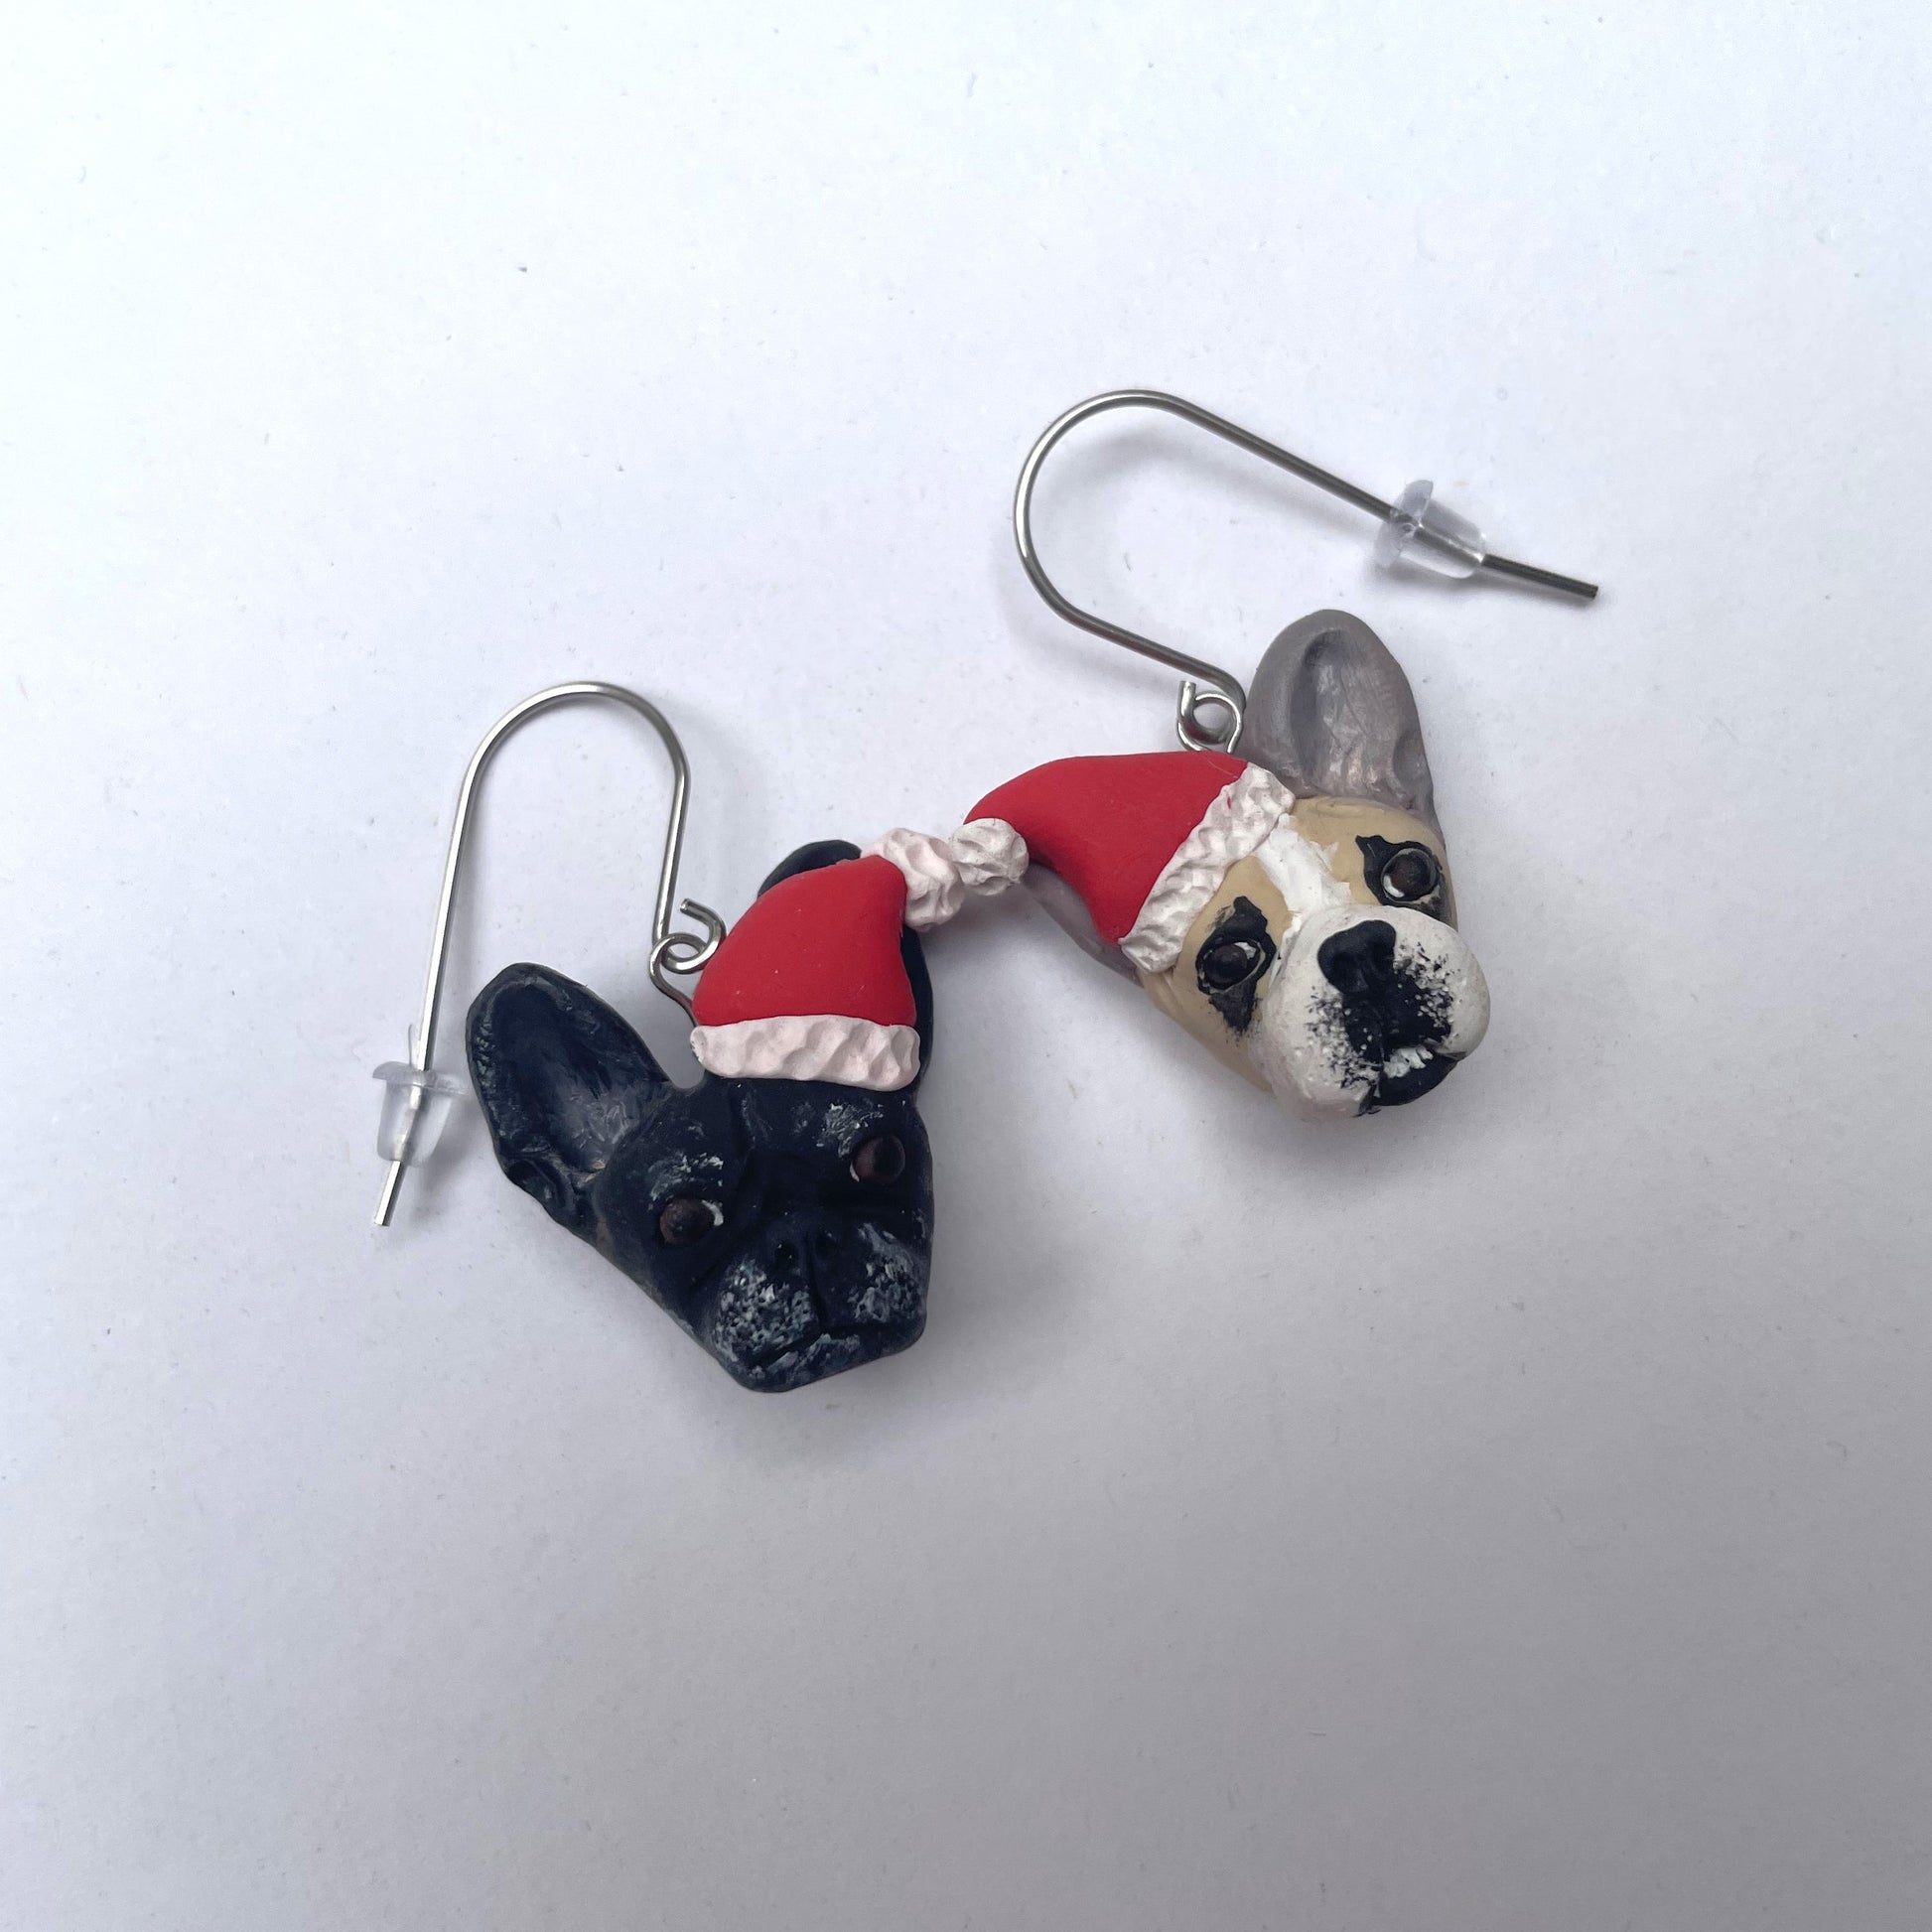 Handmade mismatched custom french bulldog hook dangle earrings wearing santa hats.